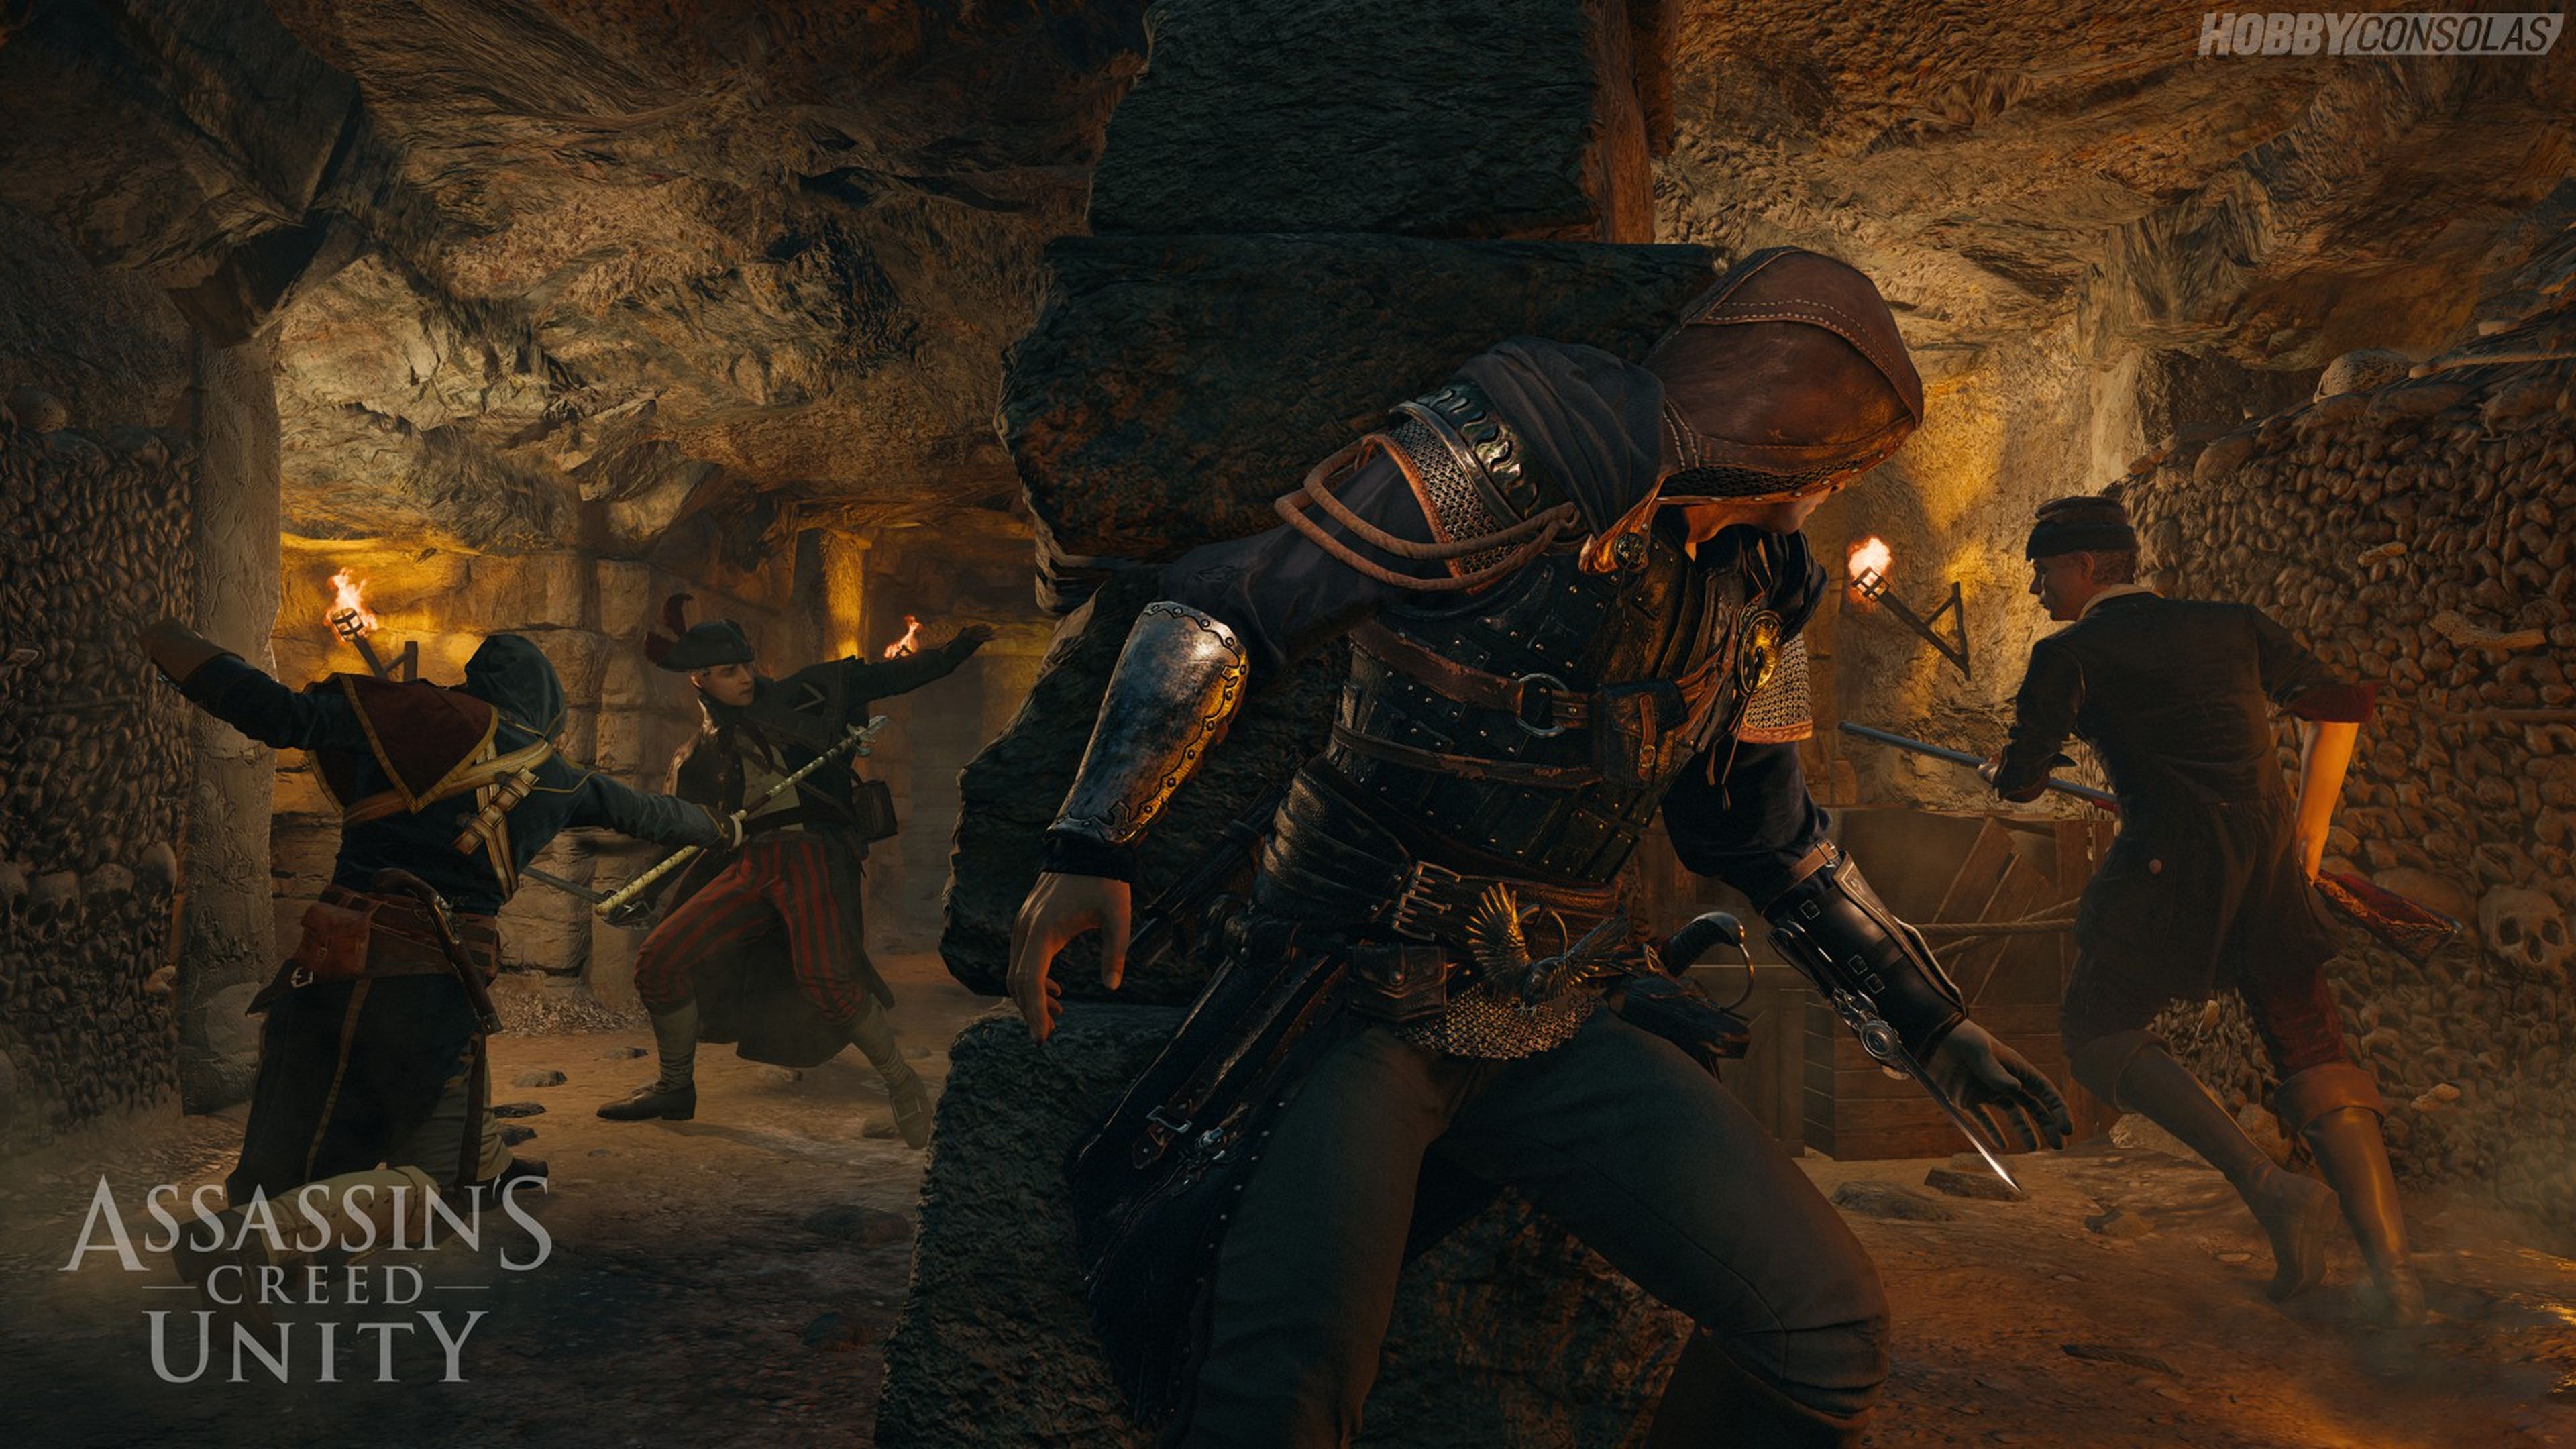 Filtrado un pack de Xbox One con Assassin's Creed Unity y Assassin's Creed IV Black Flag